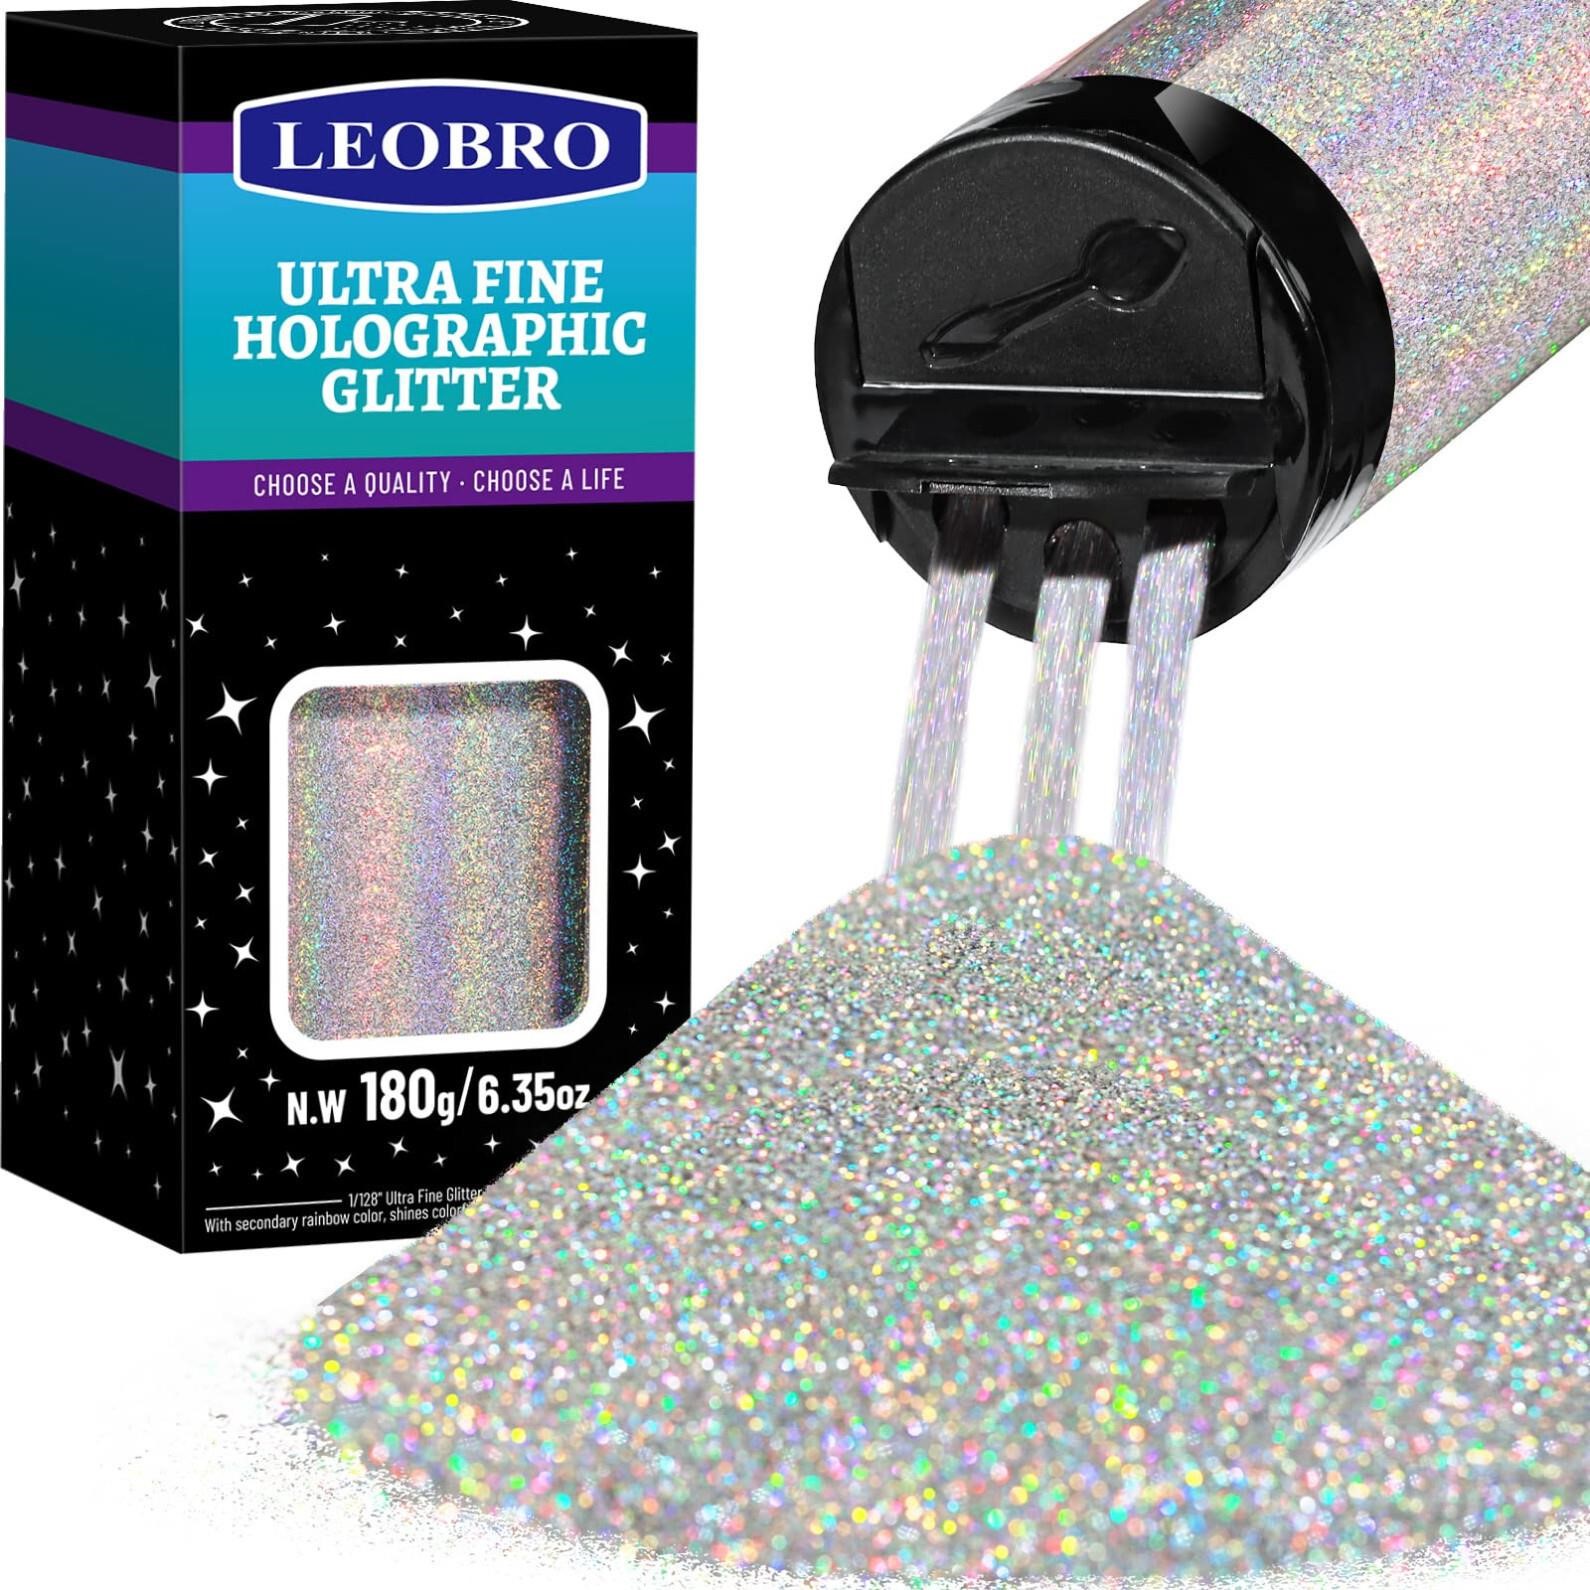 LEOBRO Glitter, 180G/6.35OZ Silver Glitter, Hologr